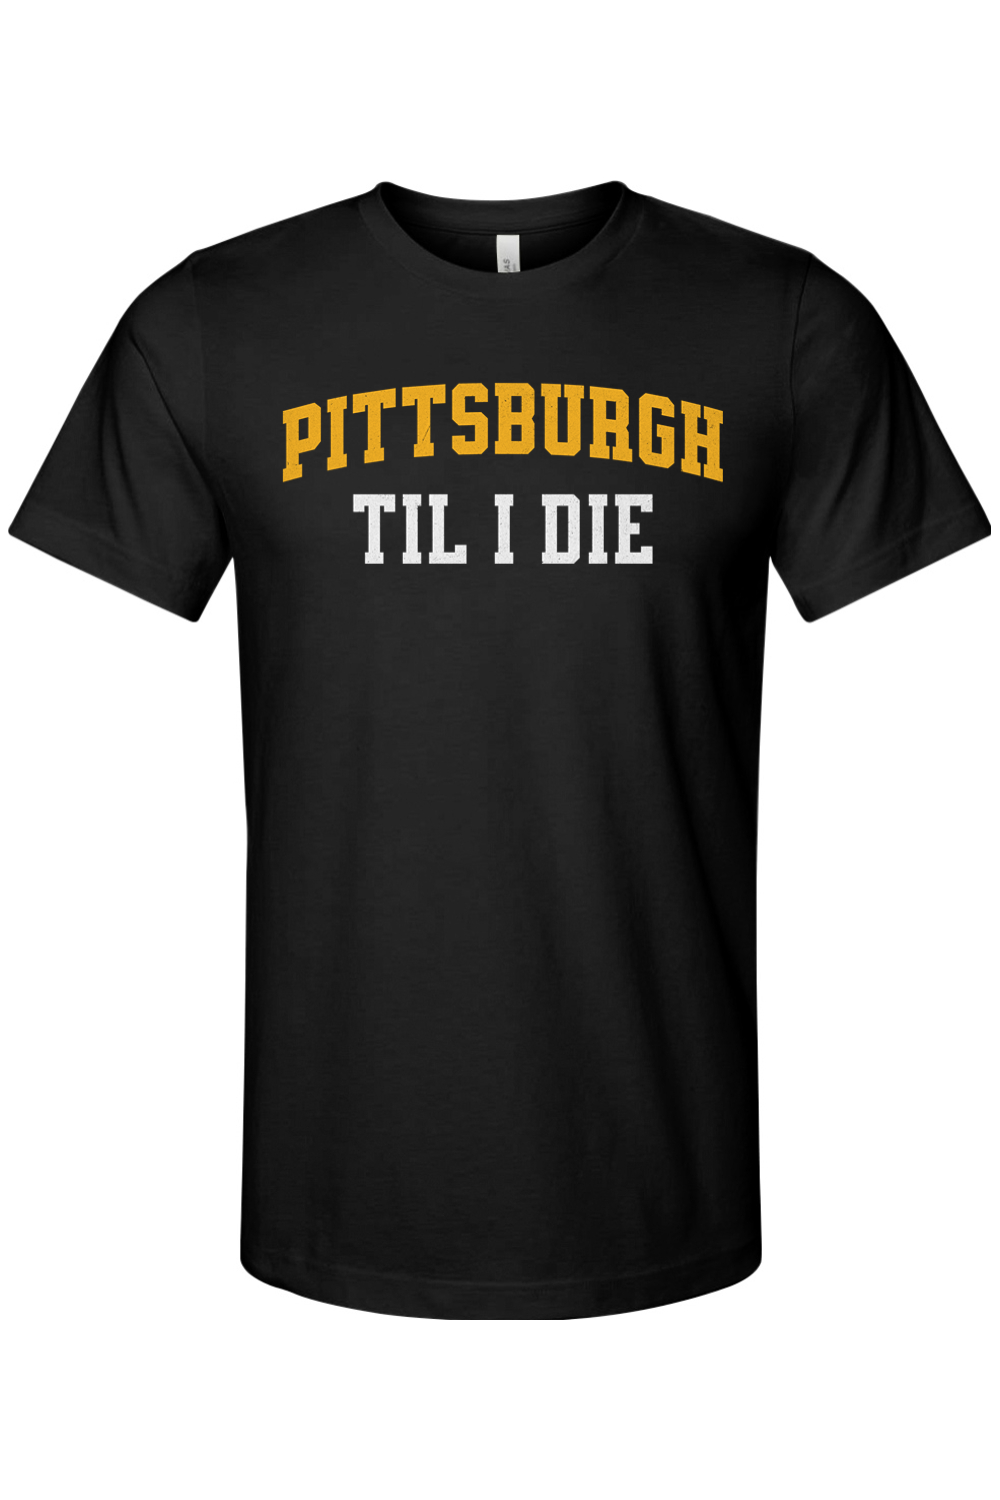 Pittsburgh Til I Die - Yinzylvania